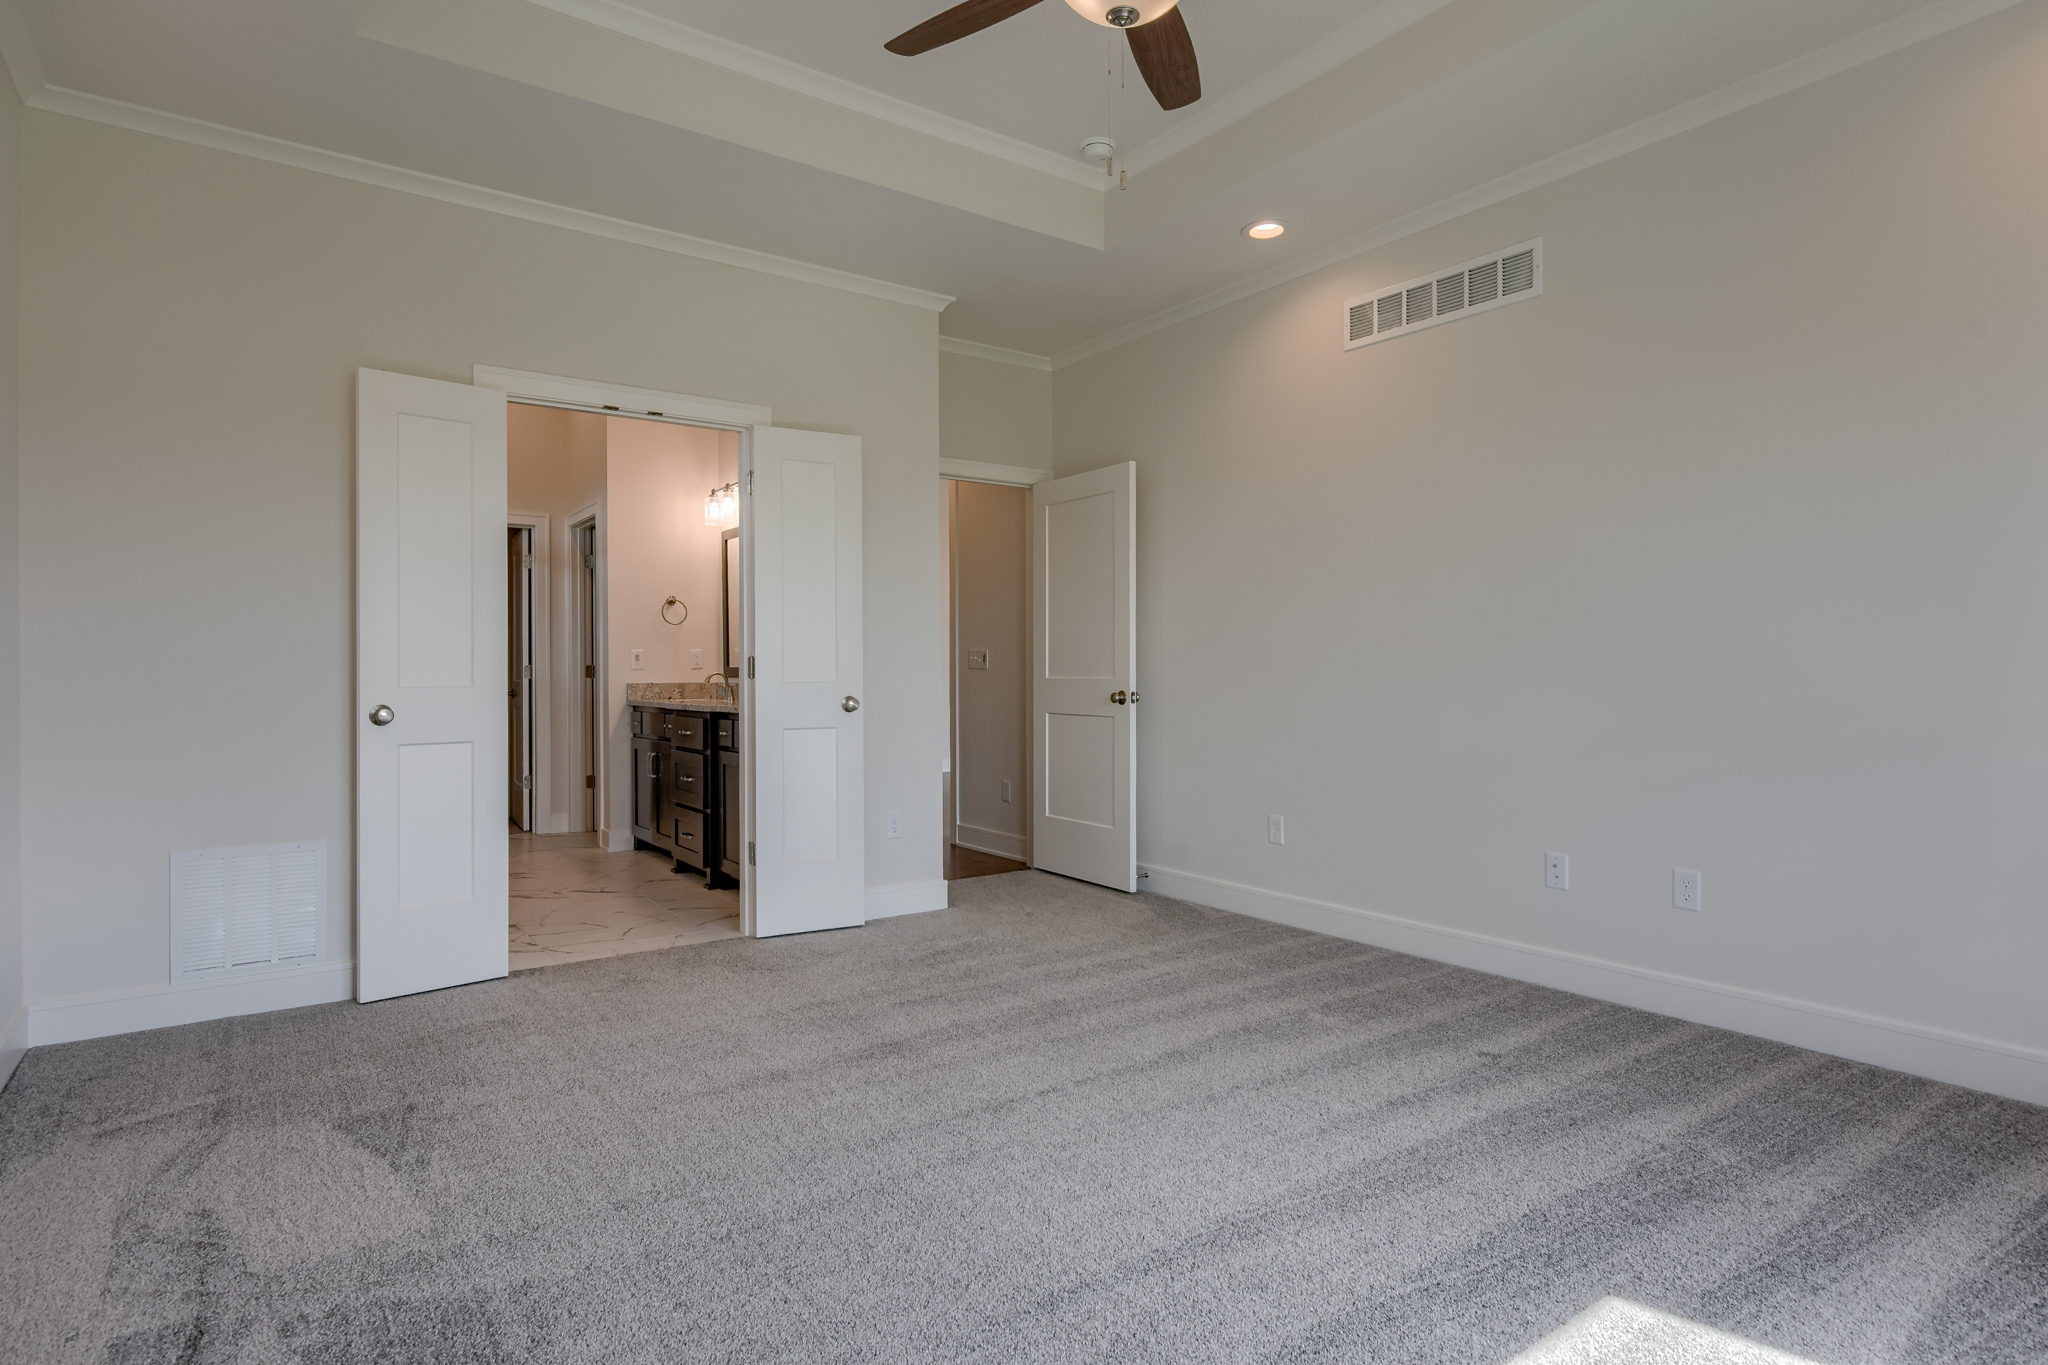 The Truman reverse 1.5-story floor plan master bedroom by Patriot Homes.